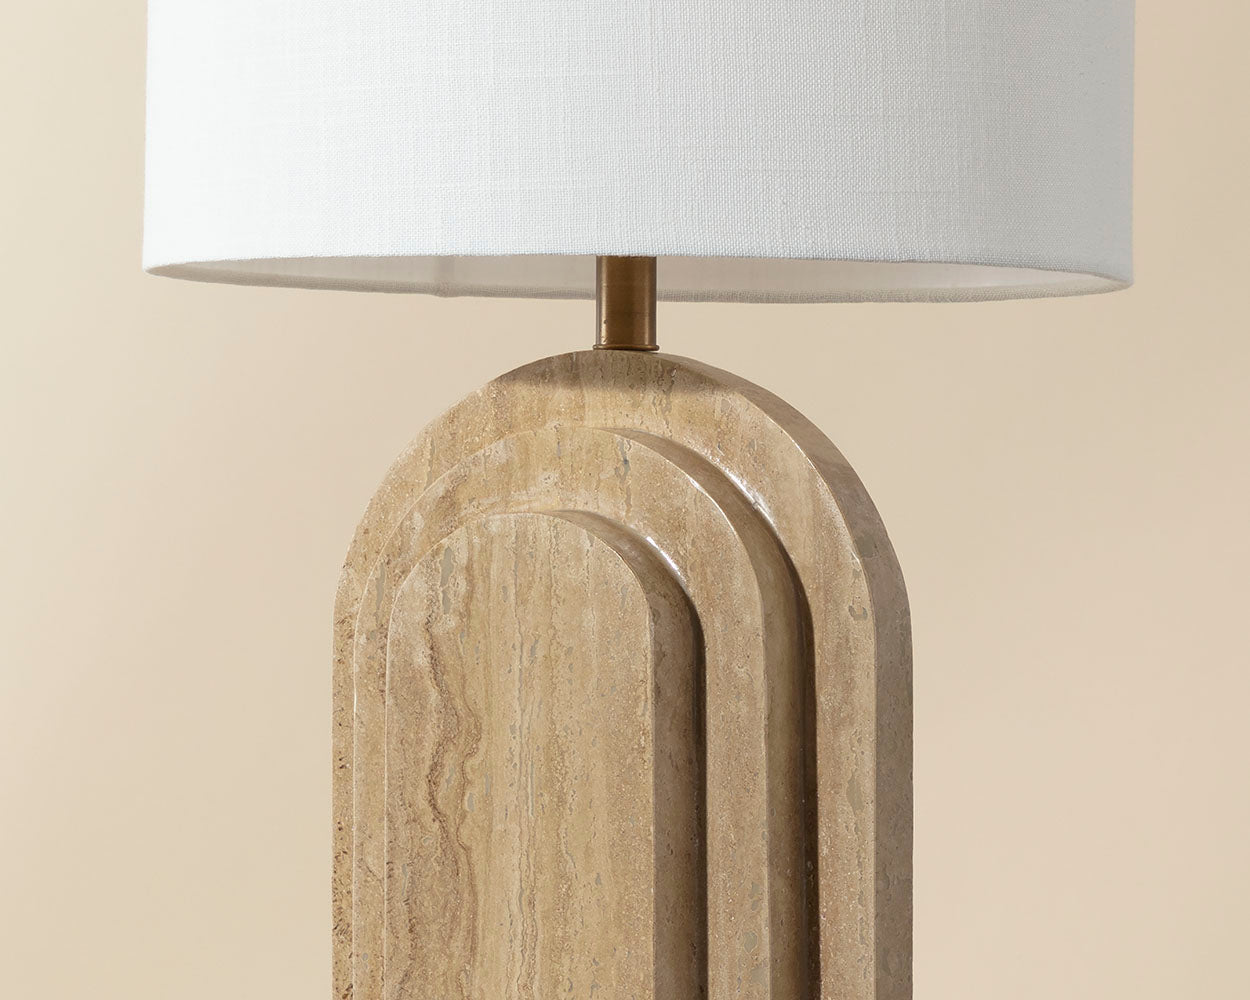 Ancona Table Lamp